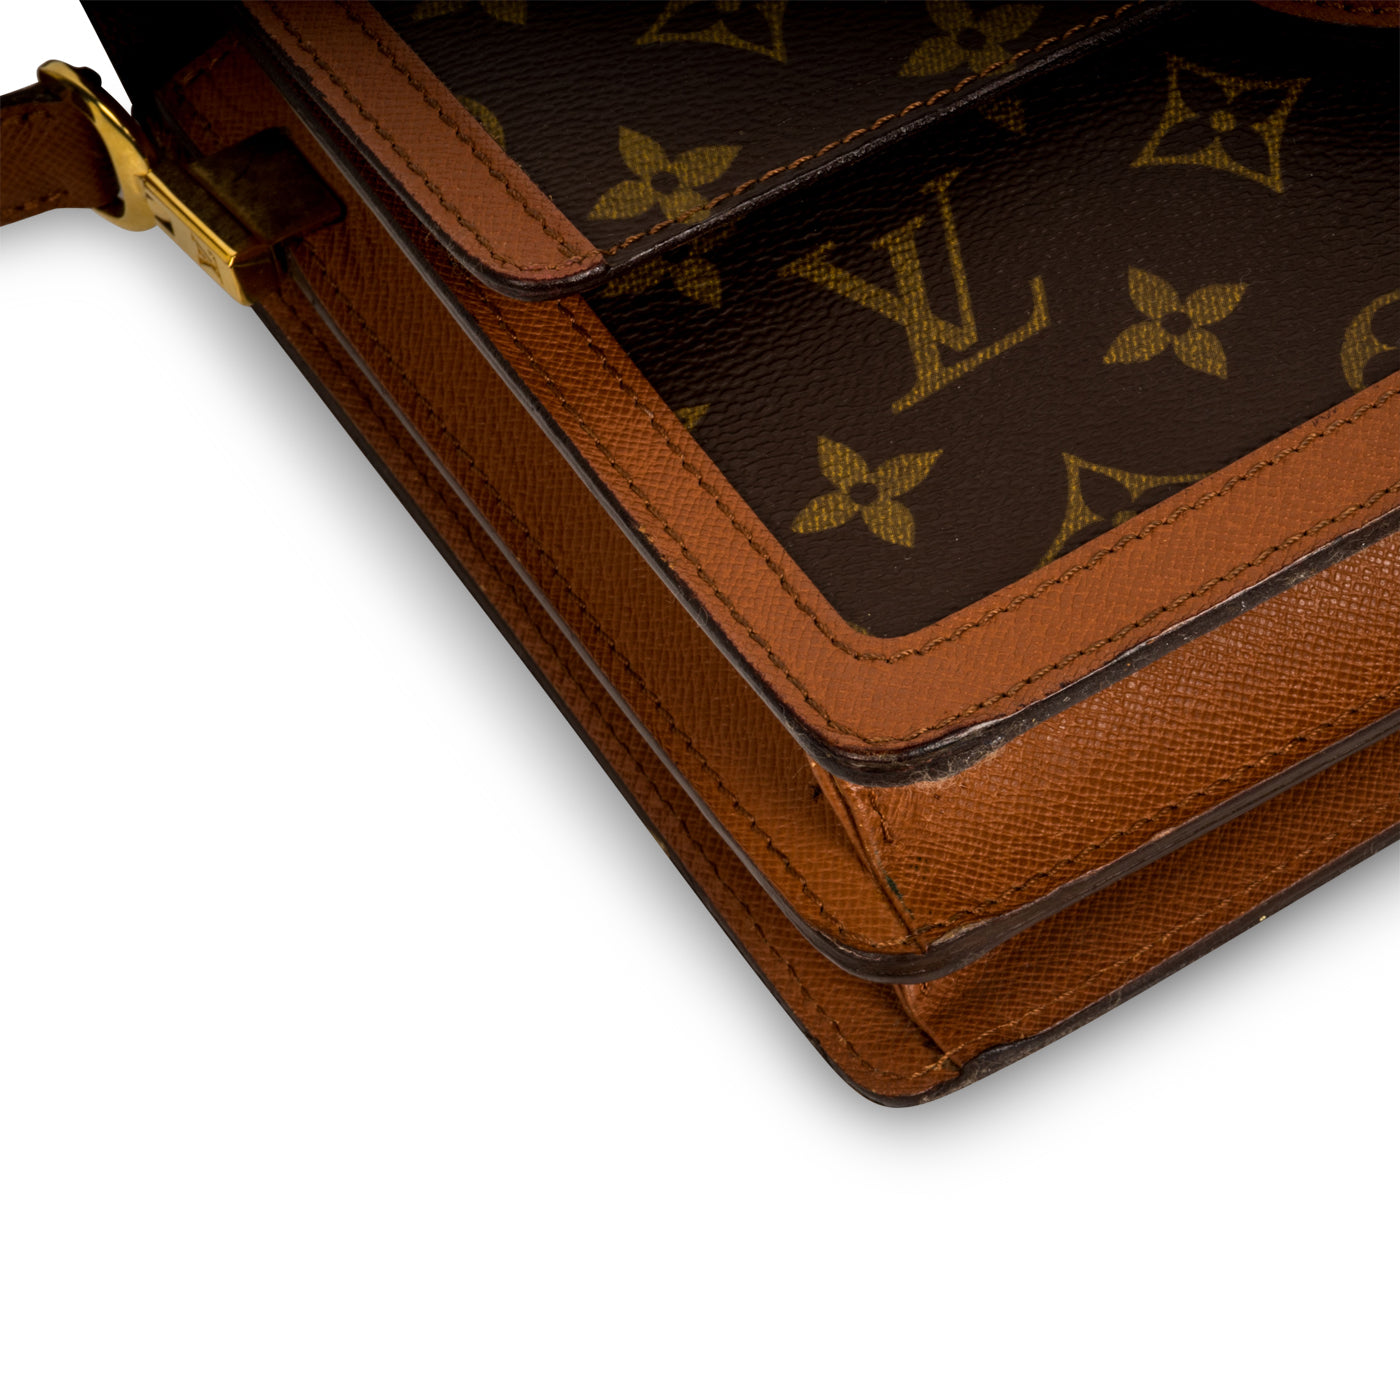 Raspail MM Monogram – Keeks Designer Handbags